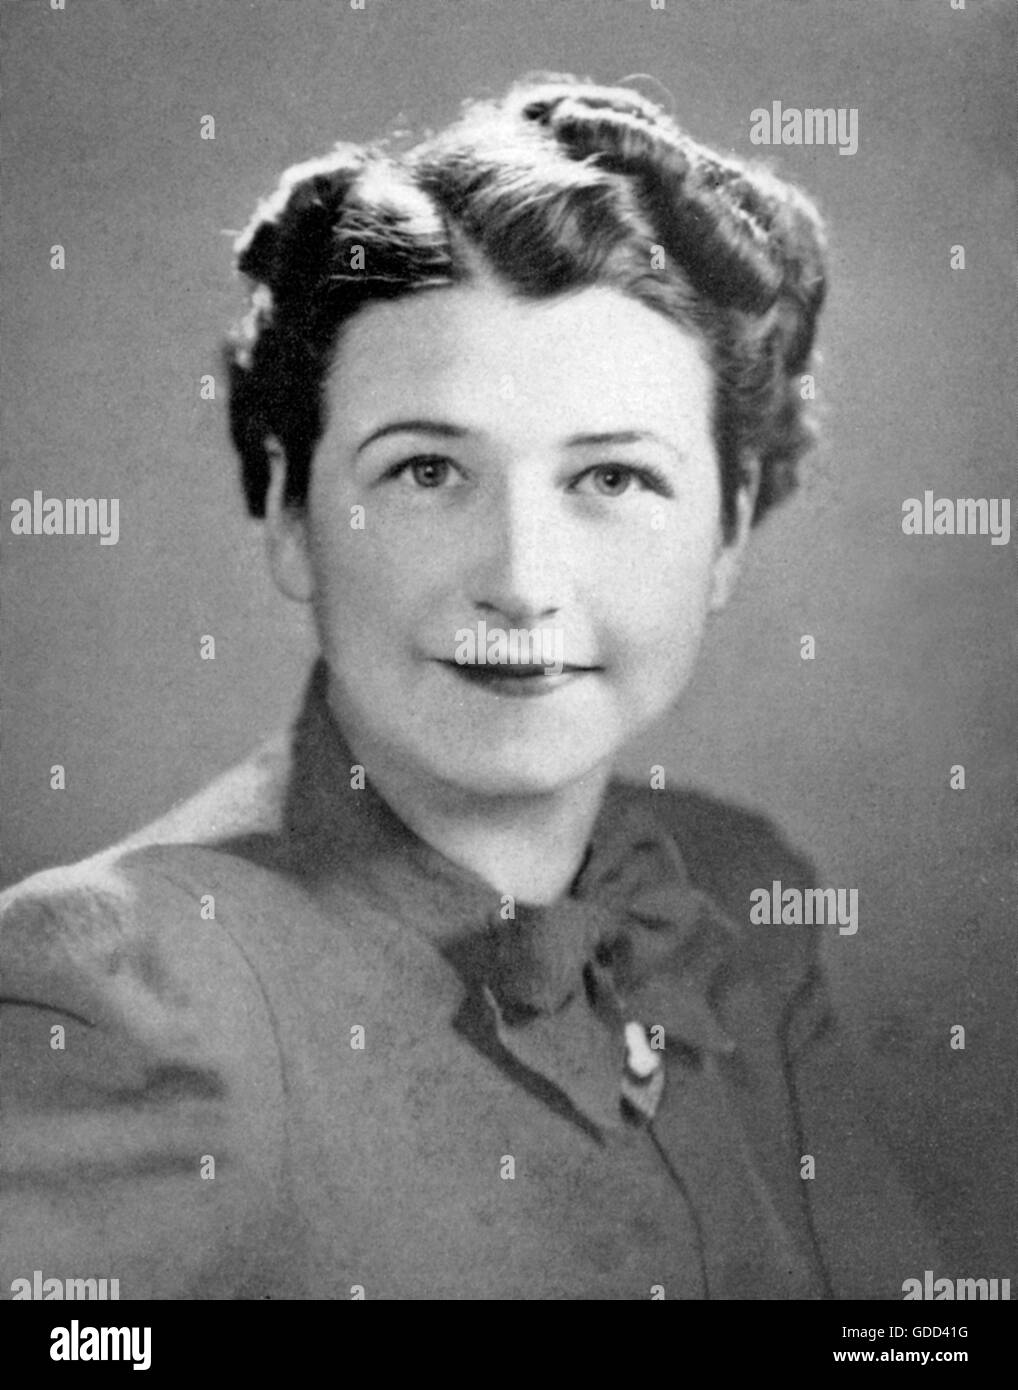 Wakefield, Ruth Graves, 17.6.1903 - 10.1.1977, American businesswoman, portrait, 1930s, Stock Photo